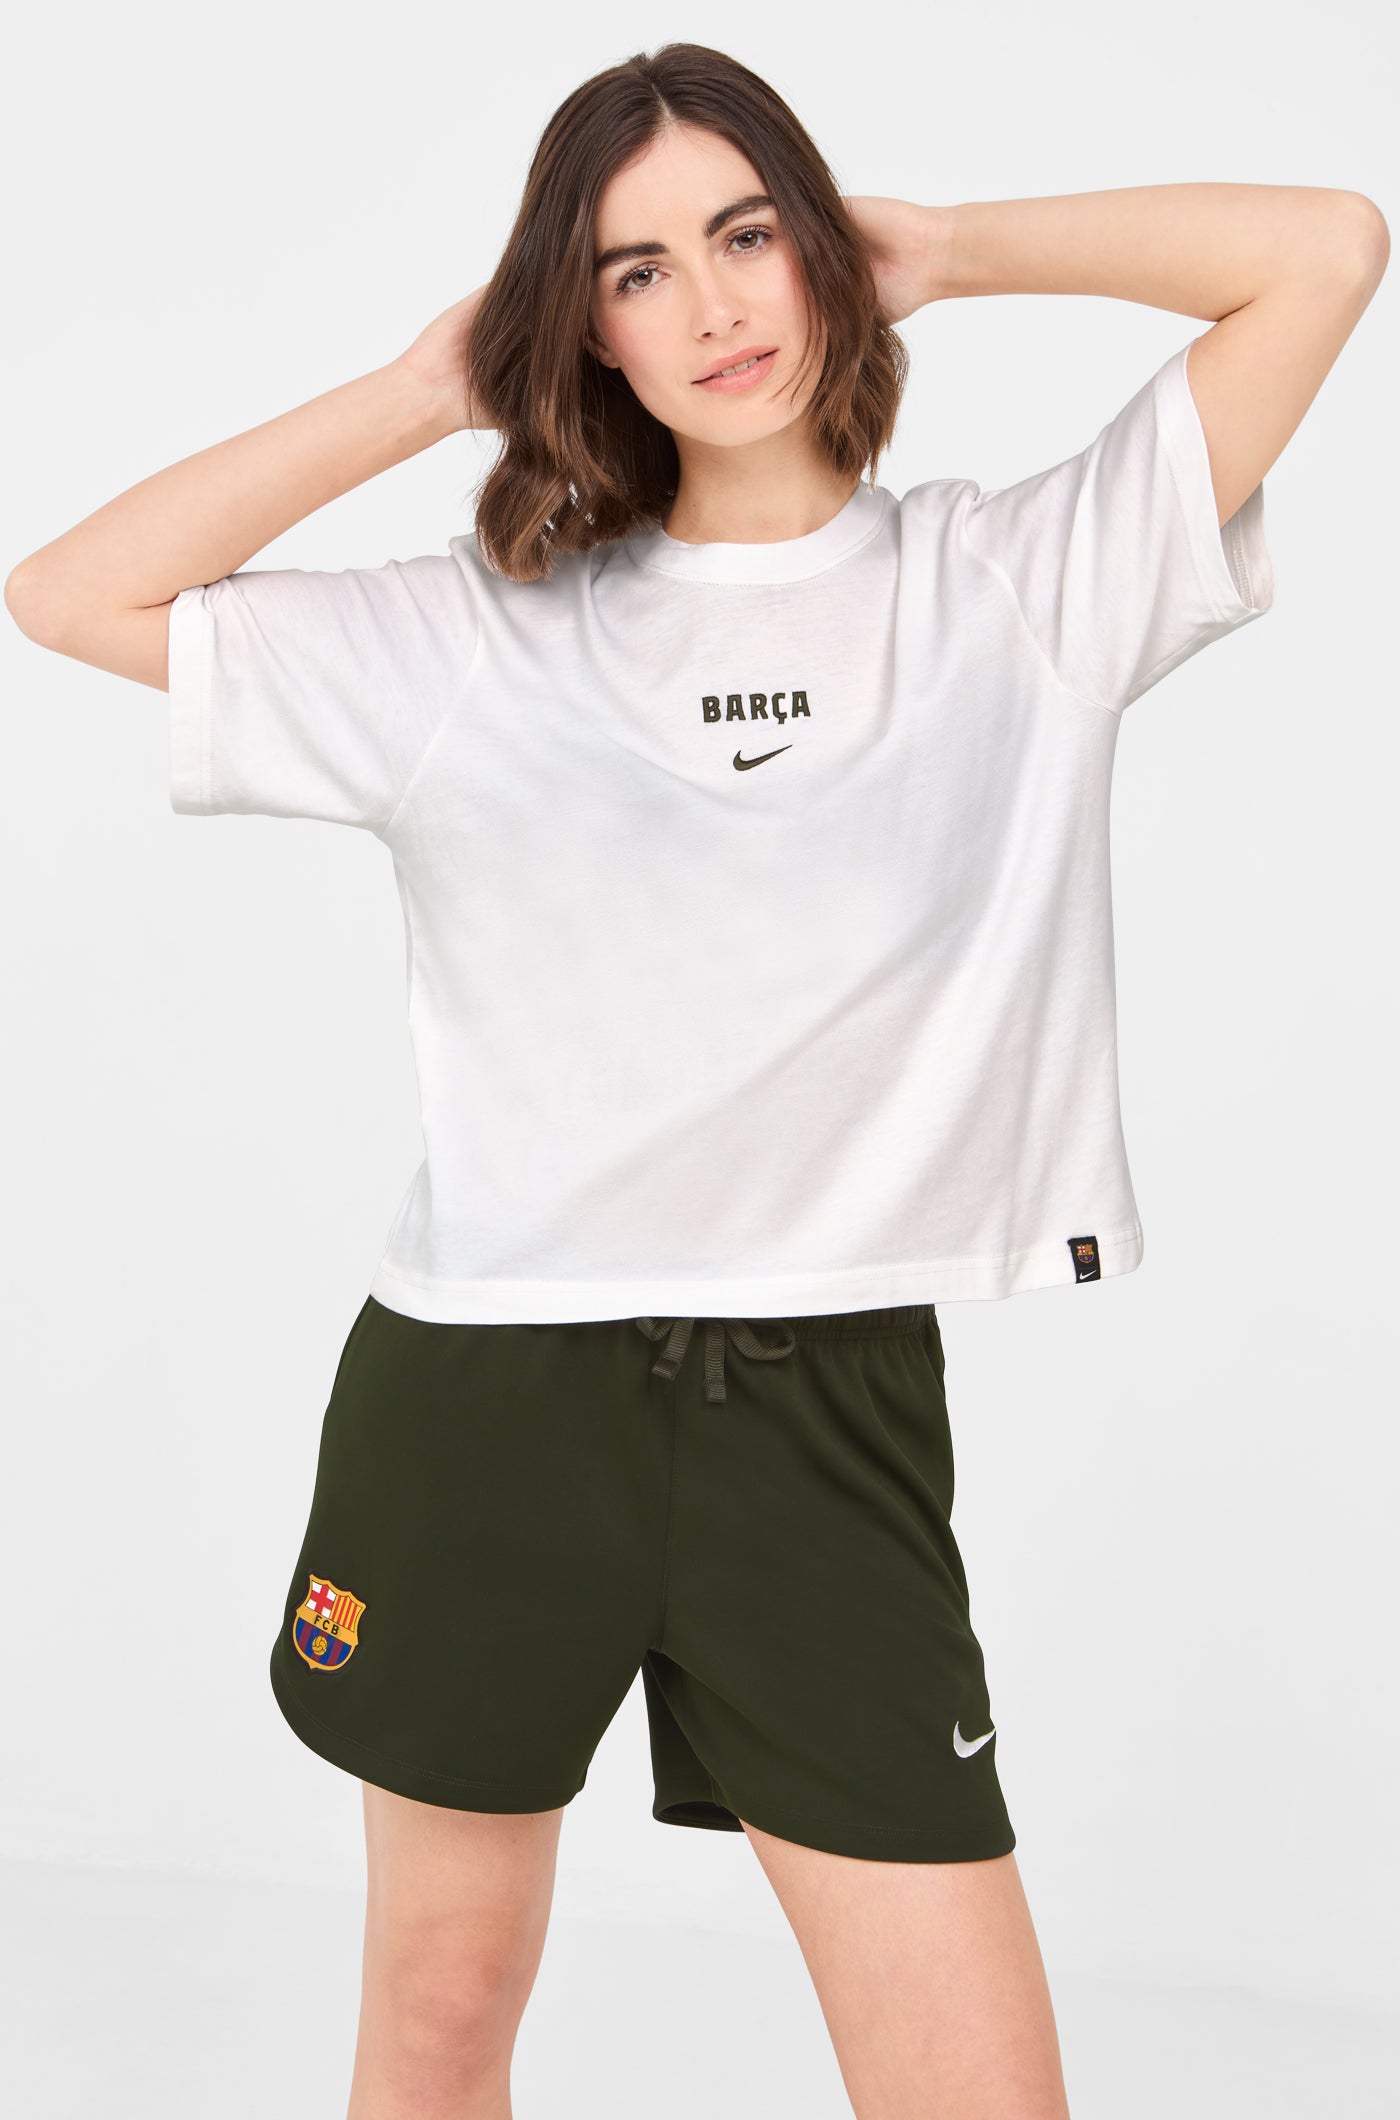 Camiseta manga corta blanca Barça Nike - Mujer